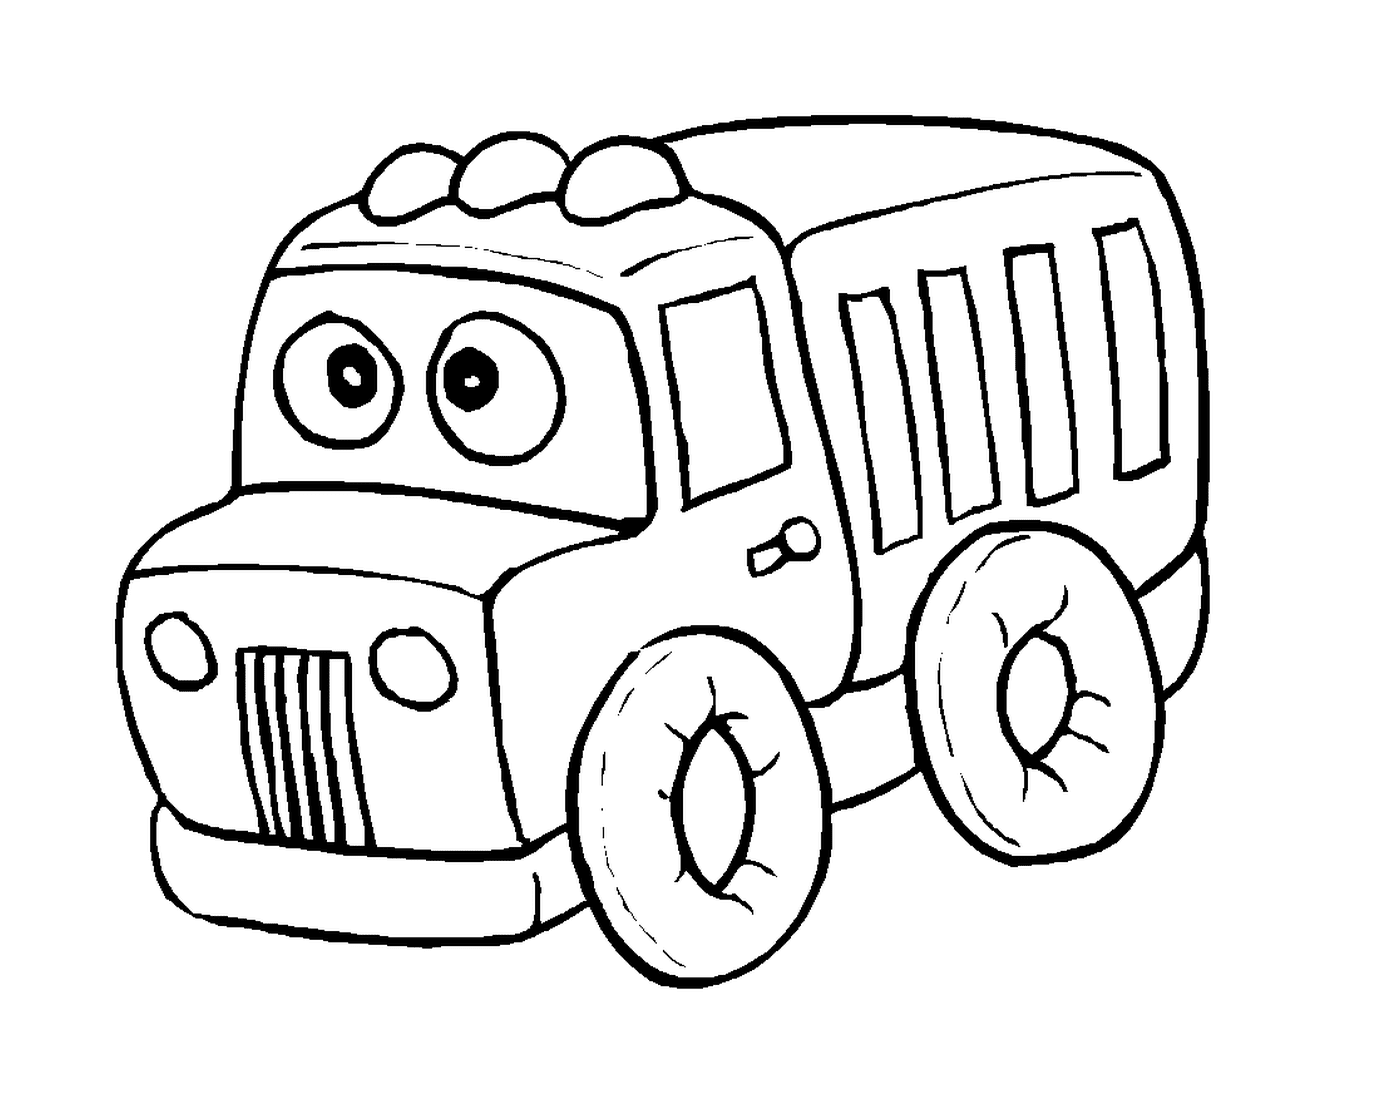  Cartoon truck 